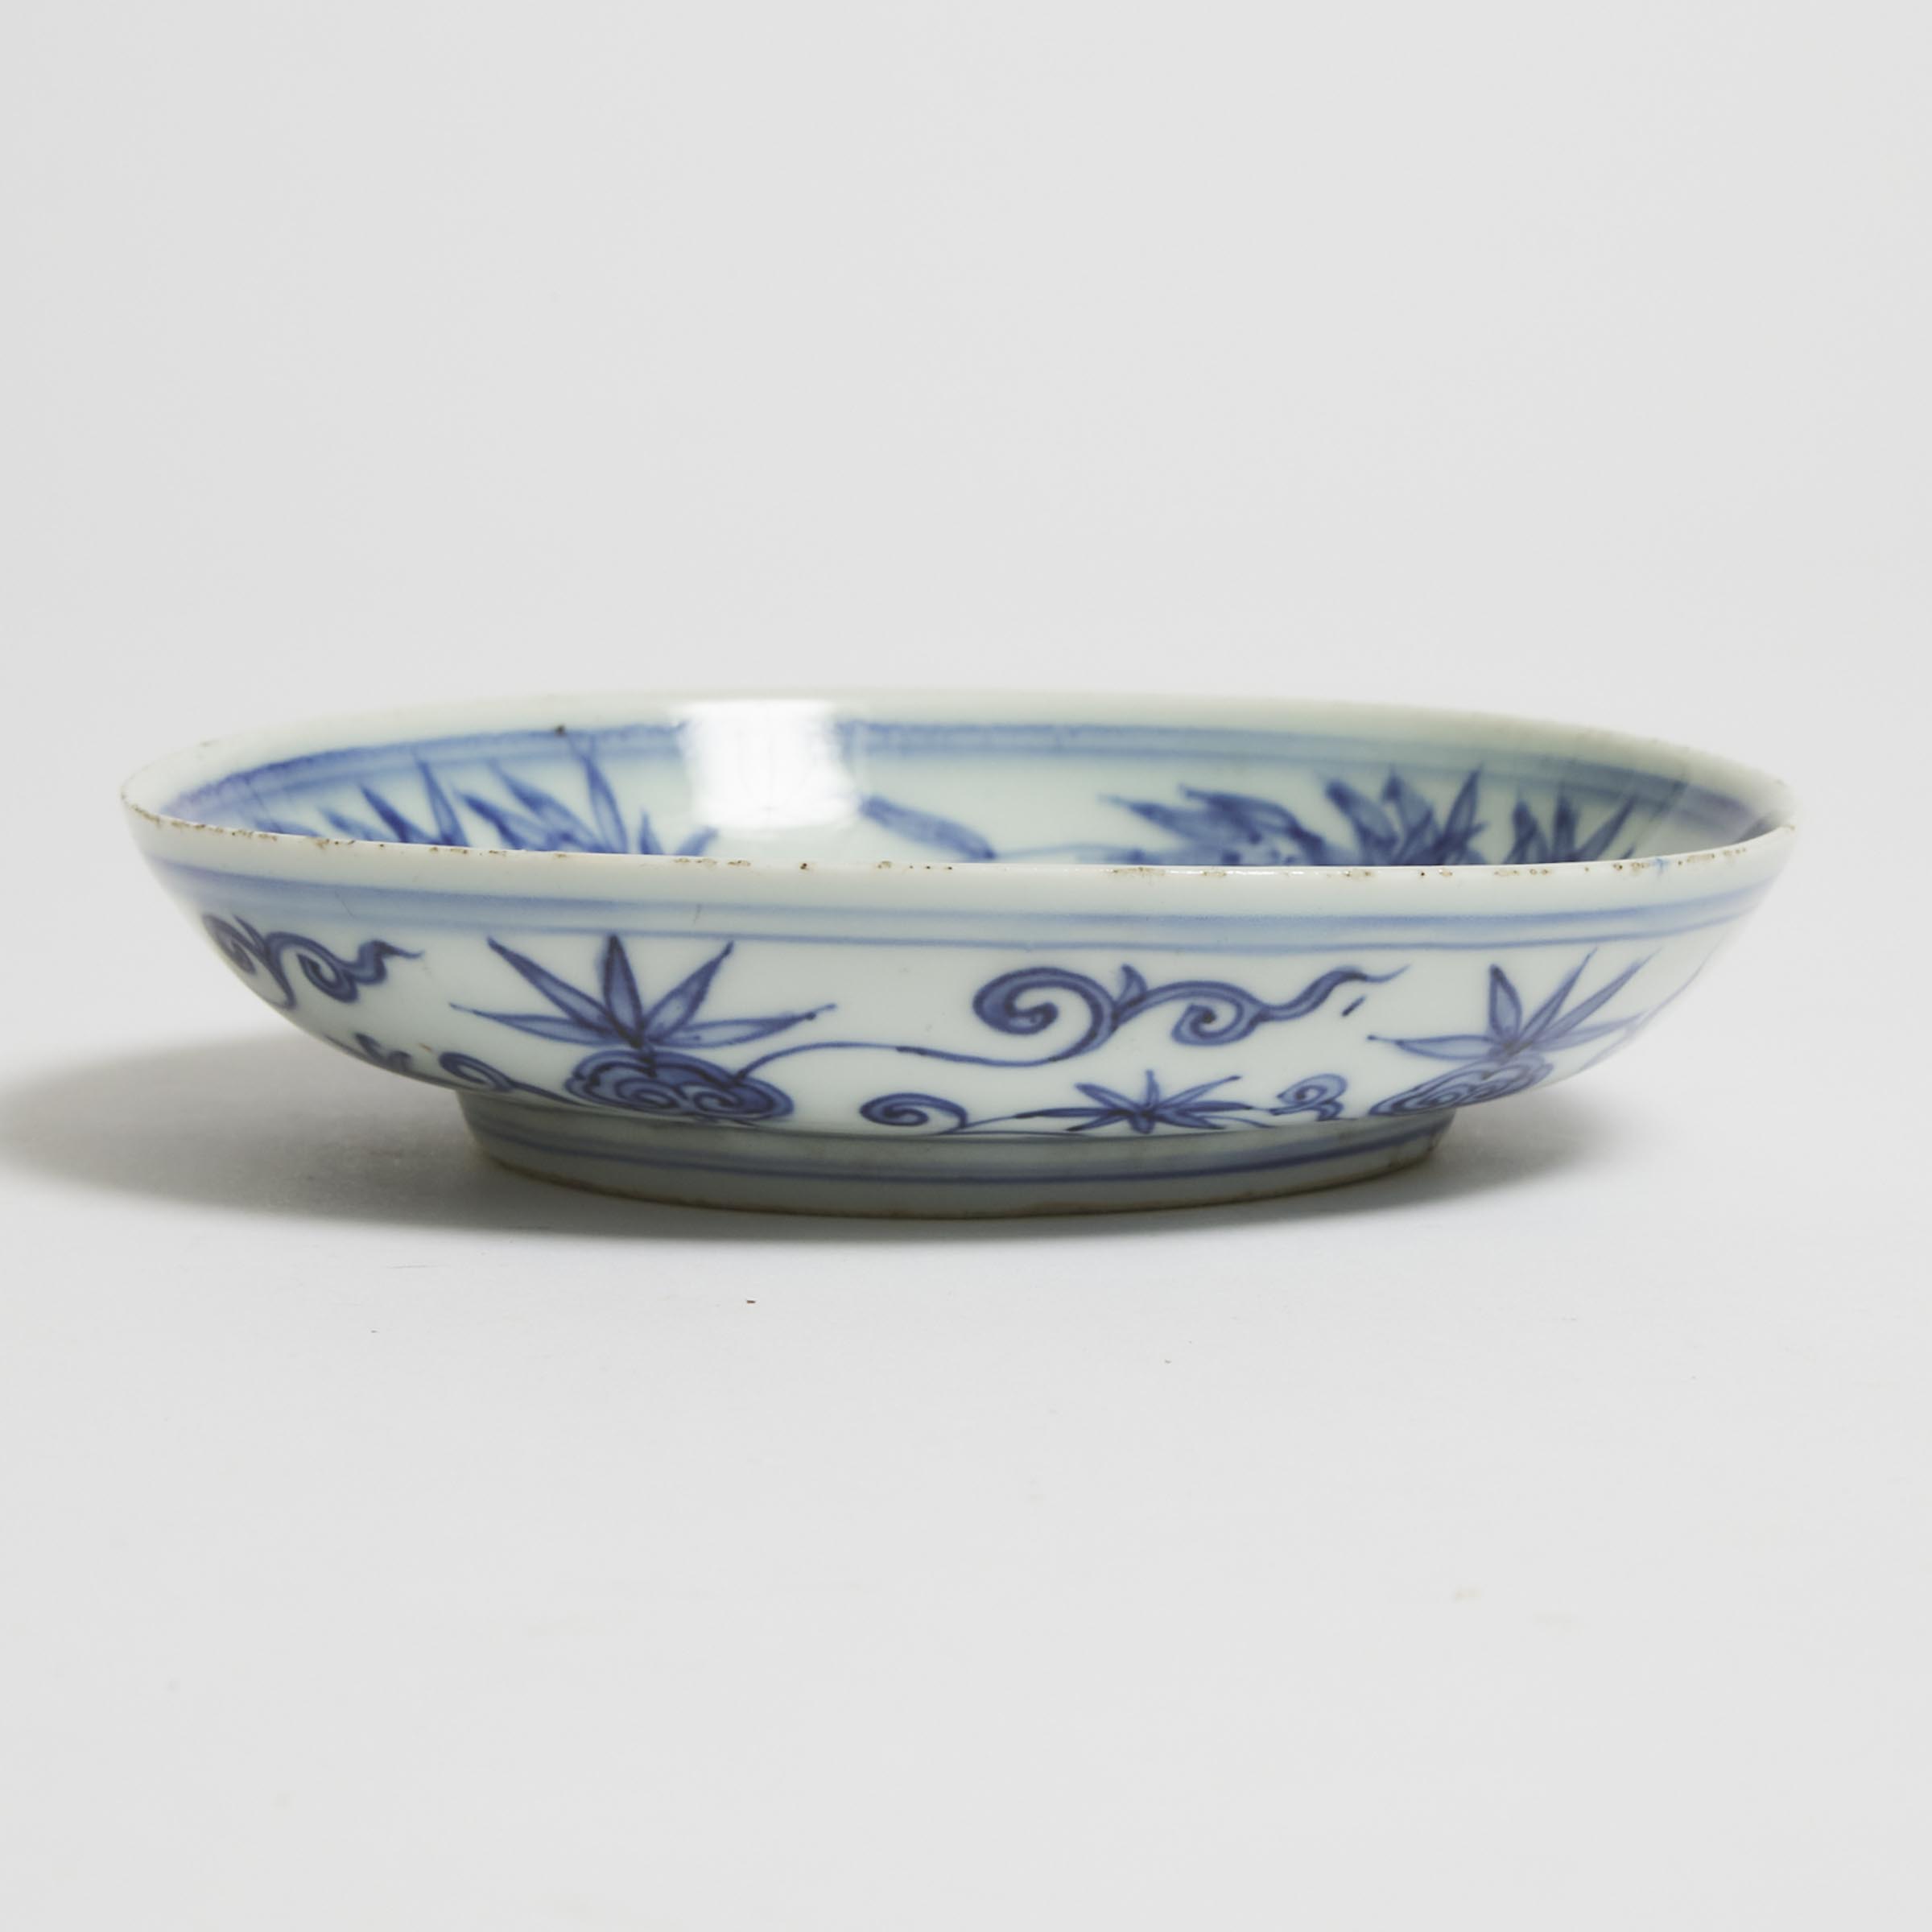 A Blue and White 'Buddhist Lion' Plate, Yong Bao Chang Chun Mark, Wanli Period (1572-1620)